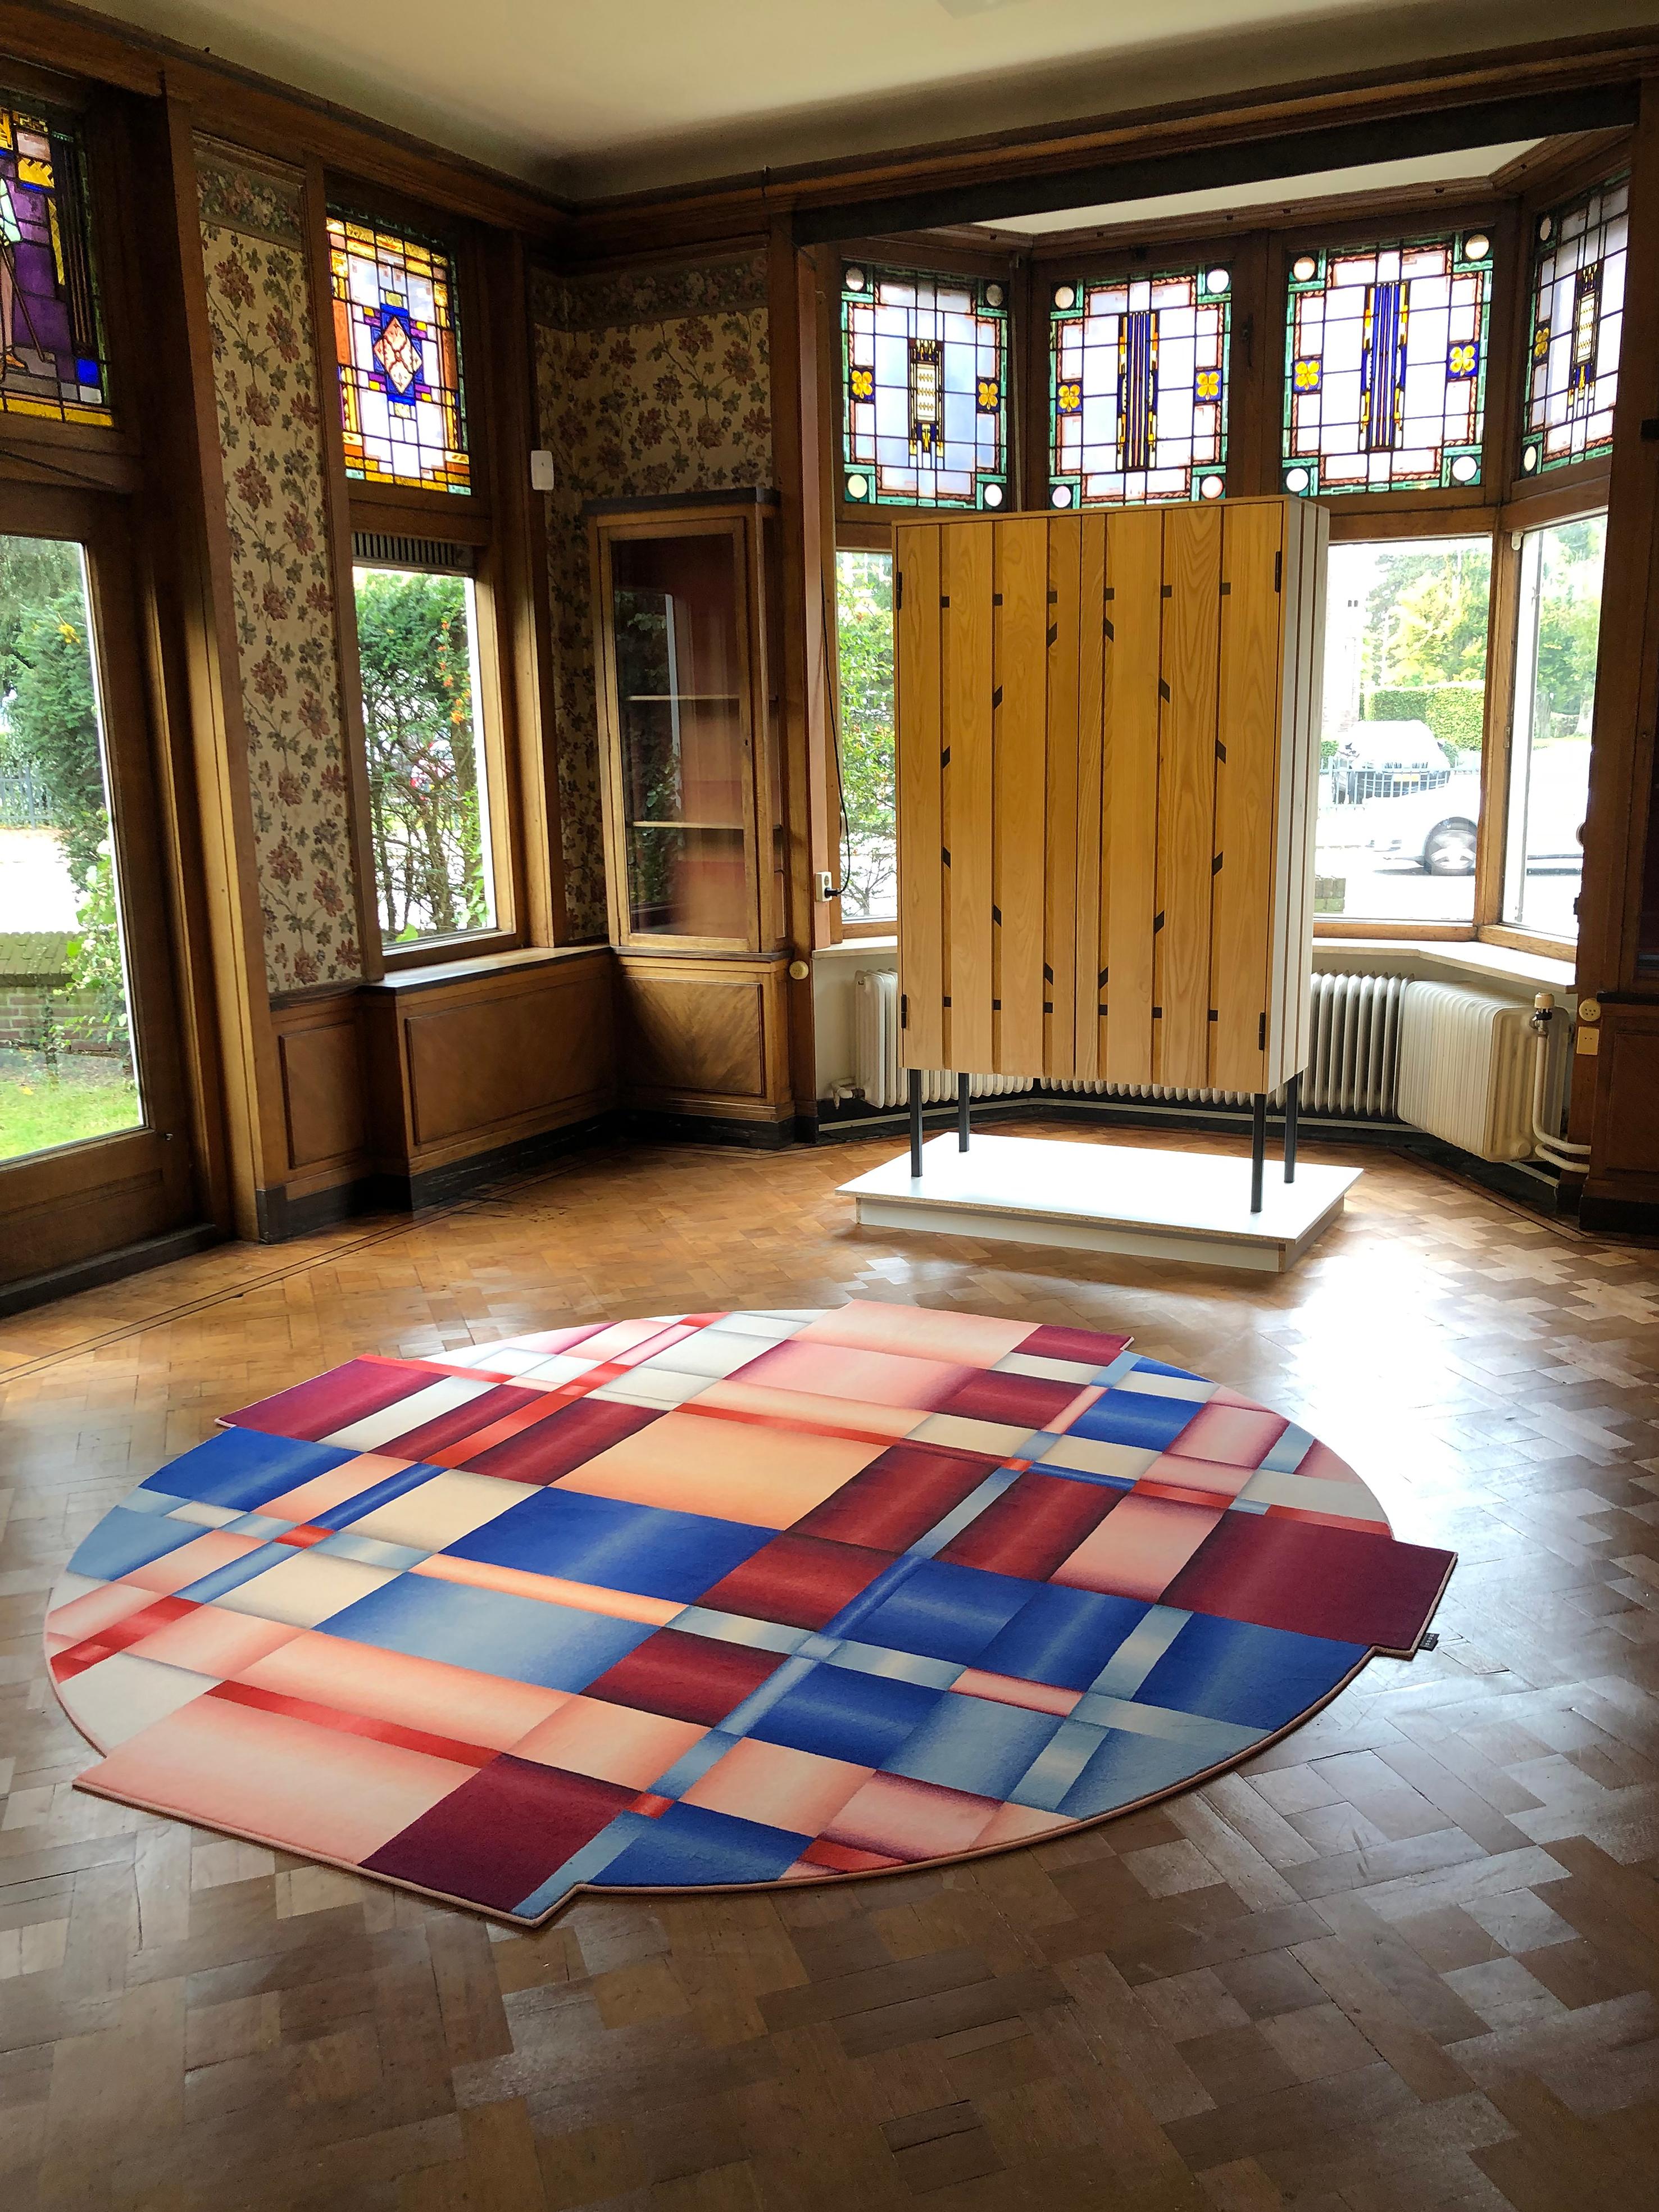 Moooi Lint Magenta Round rug in Soft Yarn Polyamide by Visser & Meijwaard

Visser & Meijwaard is a designstudio focused on product- and scenographic exhibition design based in Arnhem, The Netherlands. The studio is run by Dutch designers Vera